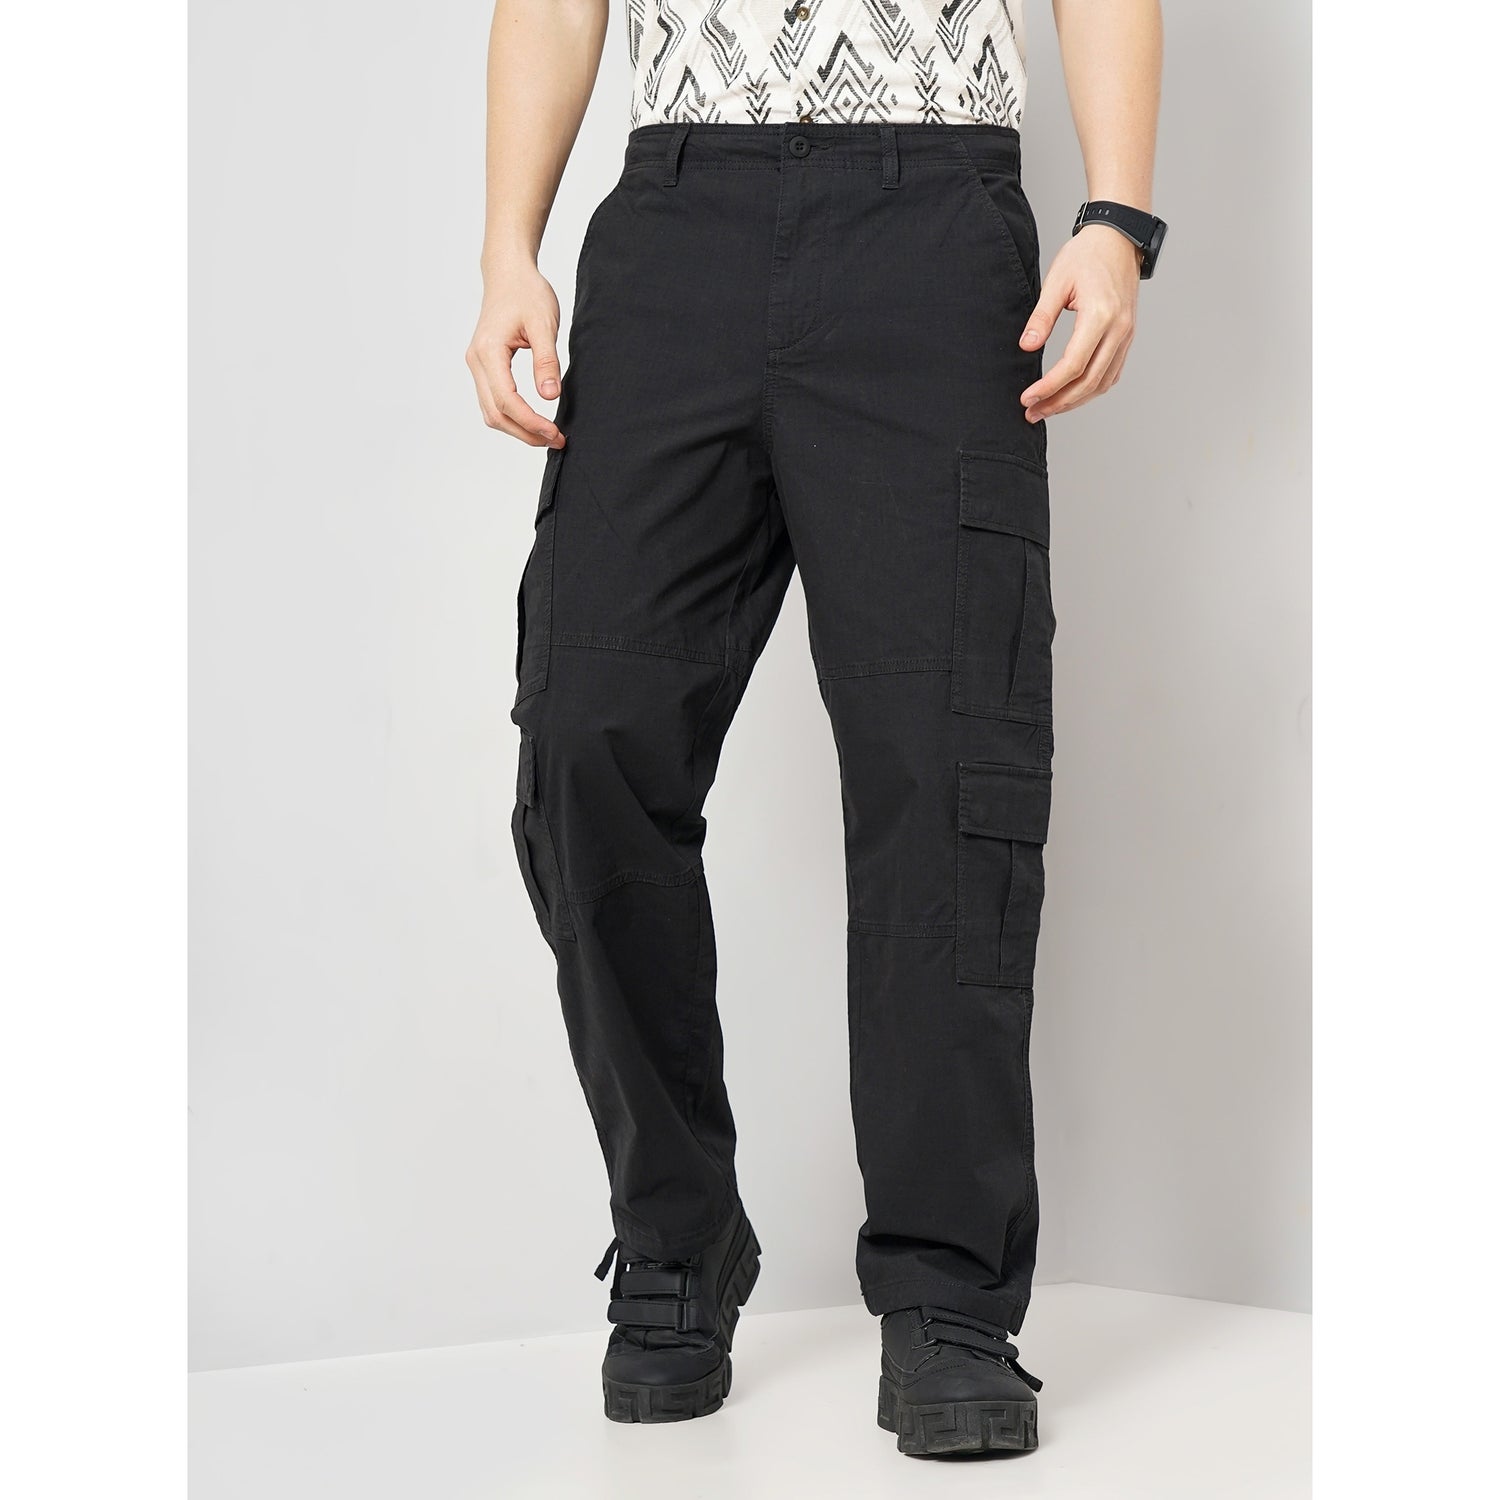 Men's Black Solid Regular Fit Cotton Trousers (GONICO)